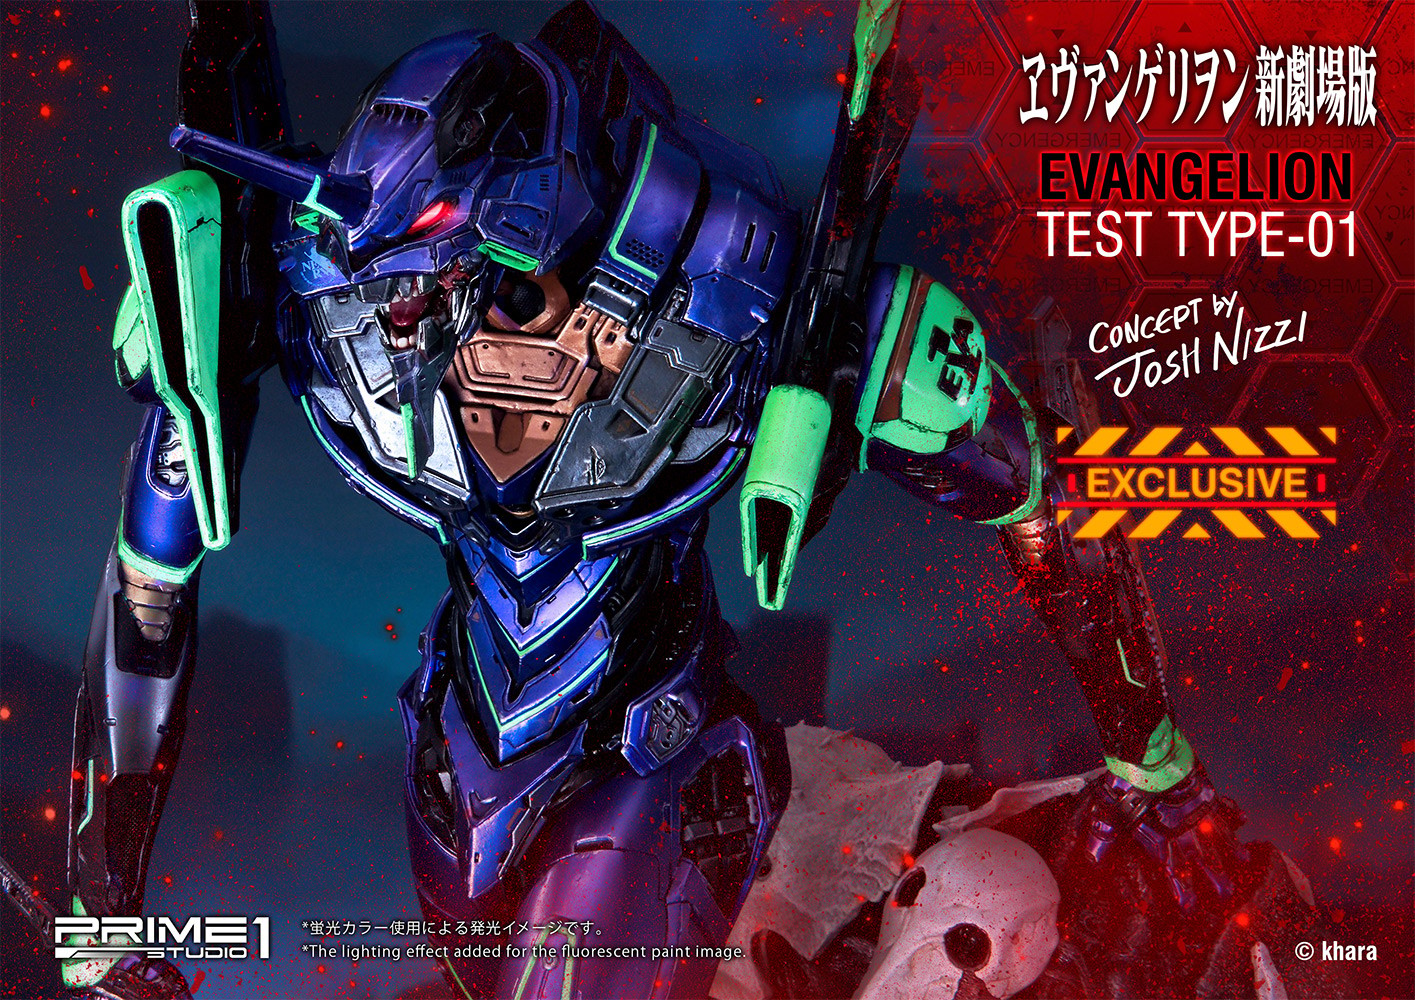 Evangelion Test Type-01 Exclusive Edition (Prototype Shown) View 1